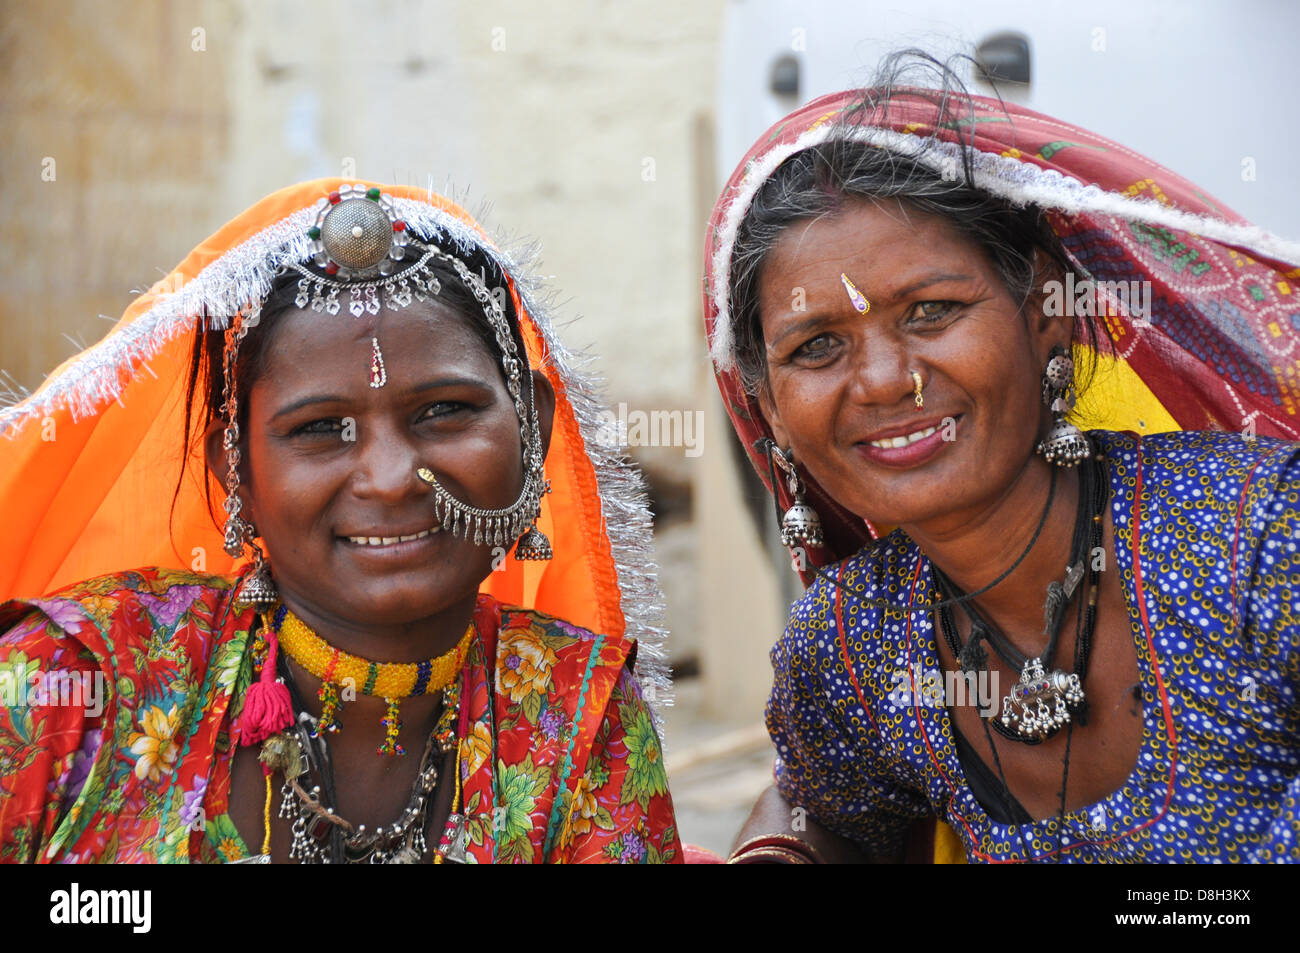 Rajasthani women in traditional sari dress and jewelry Jodhpur, Rajasthan, India Stock Photo